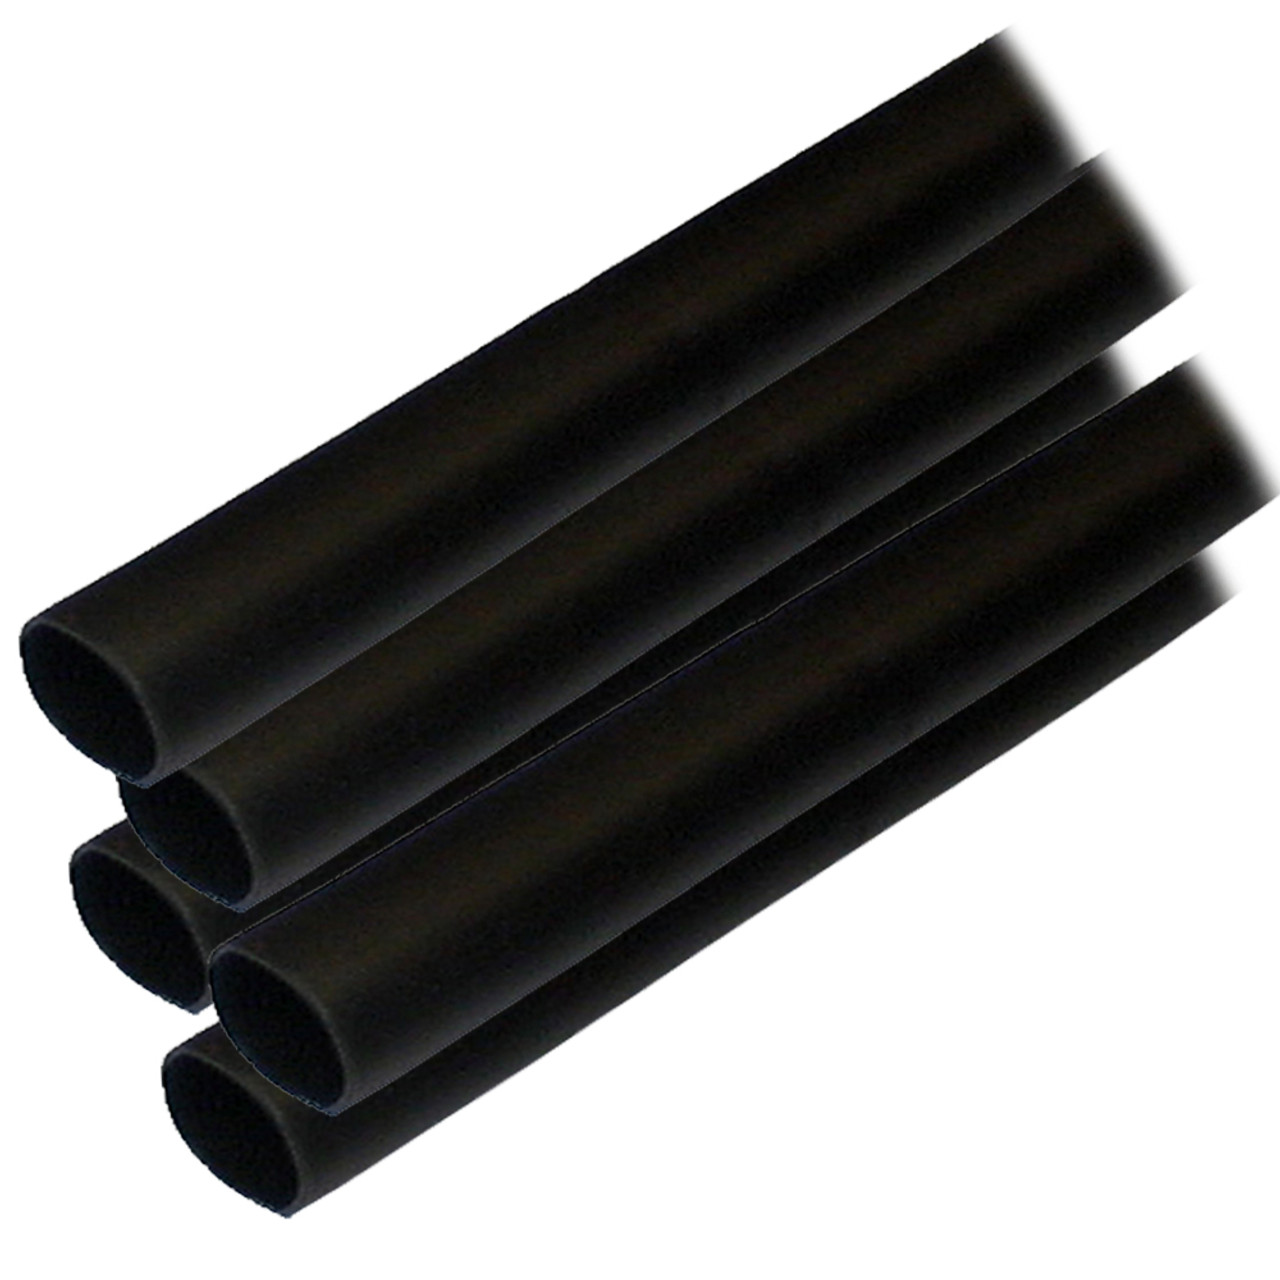 Ancor Adhesive Lined Heat Shrink Tubing (ALT) - 1\/2" x 12" - 5-Pack - Black [305124]